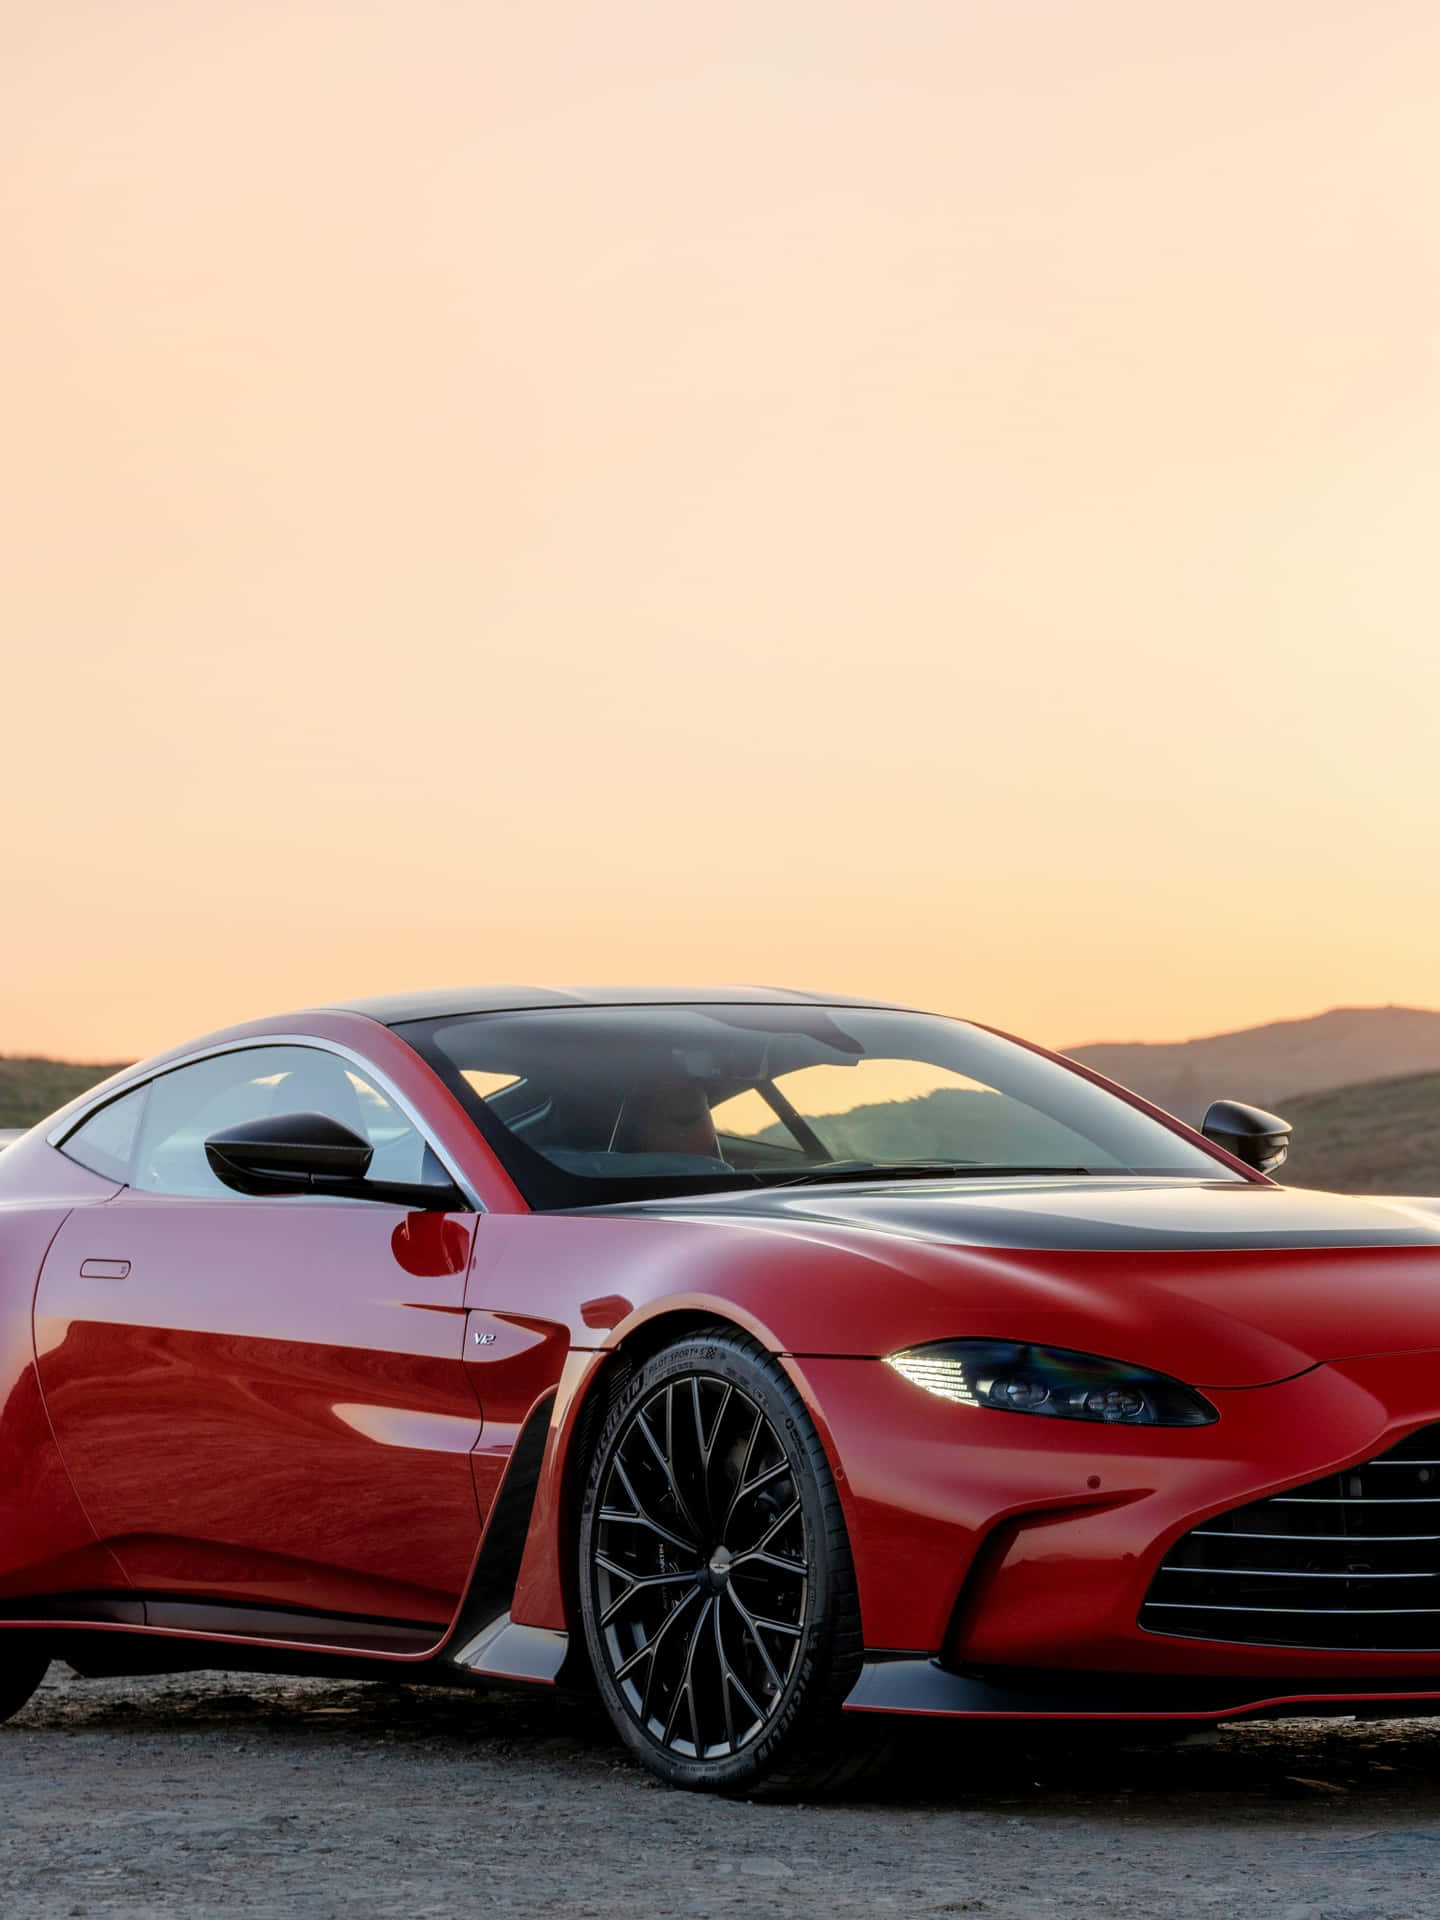 Captivating Aston Martin Vantage in Striking Scenery Wallpaper